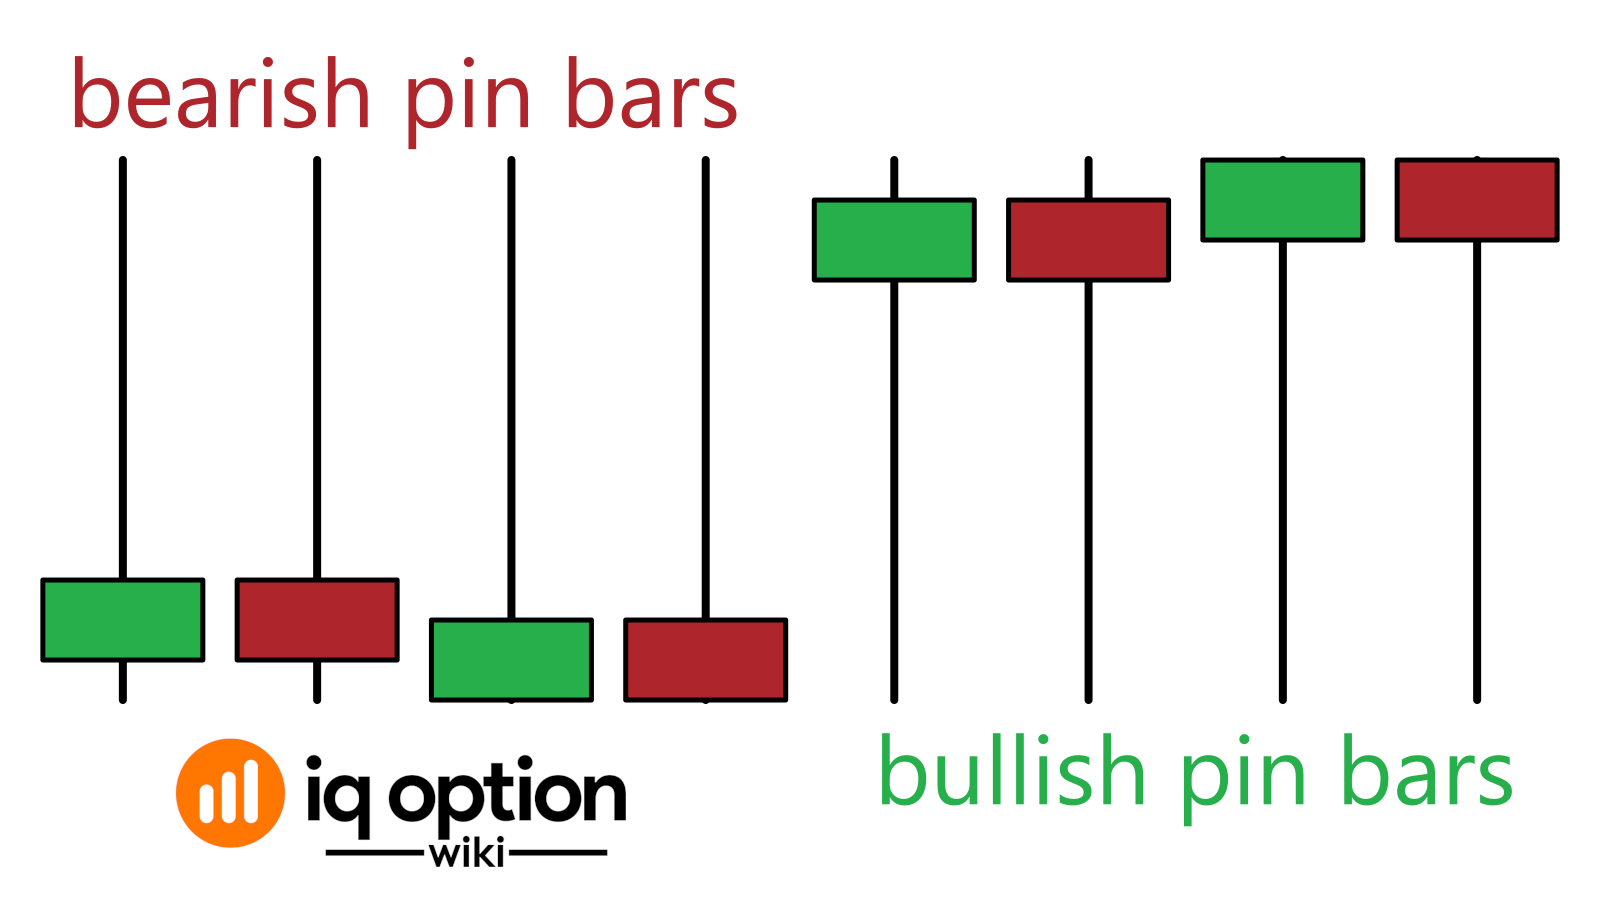 pin bar烛台可以看跌或看涨